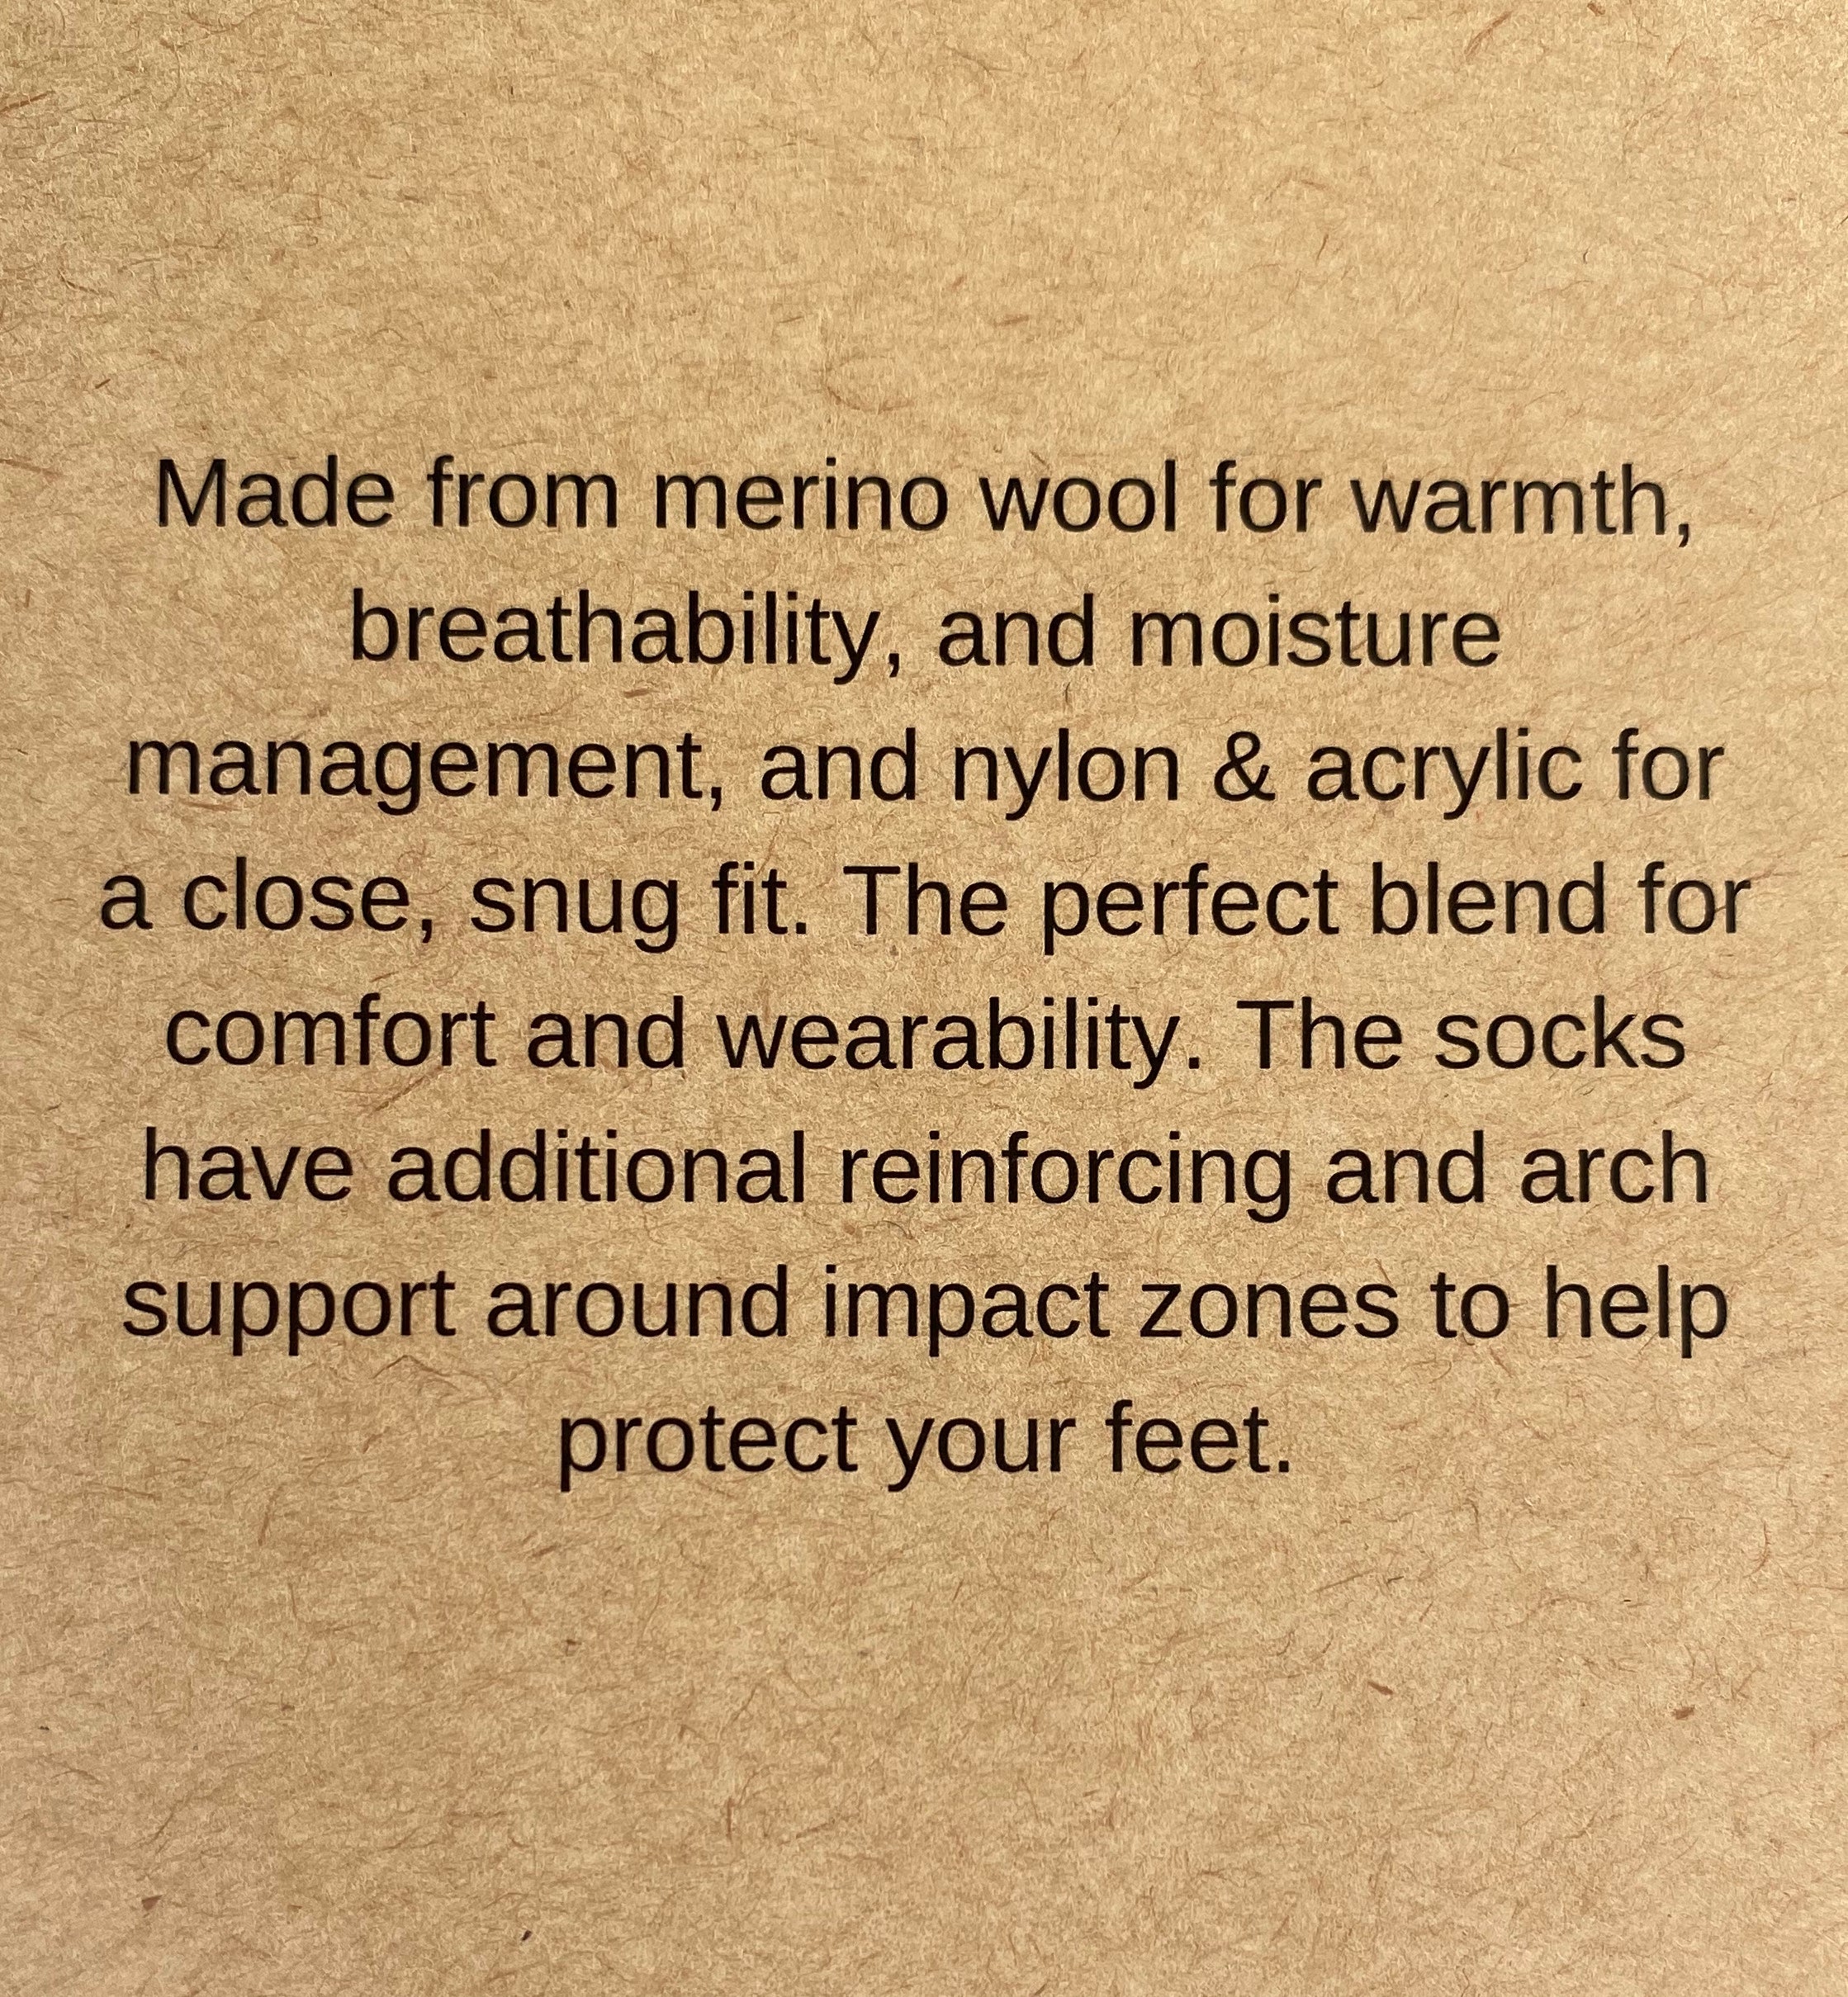 Unisex Merino Gumboot Socks - 2 Pack - Mount Kiwi